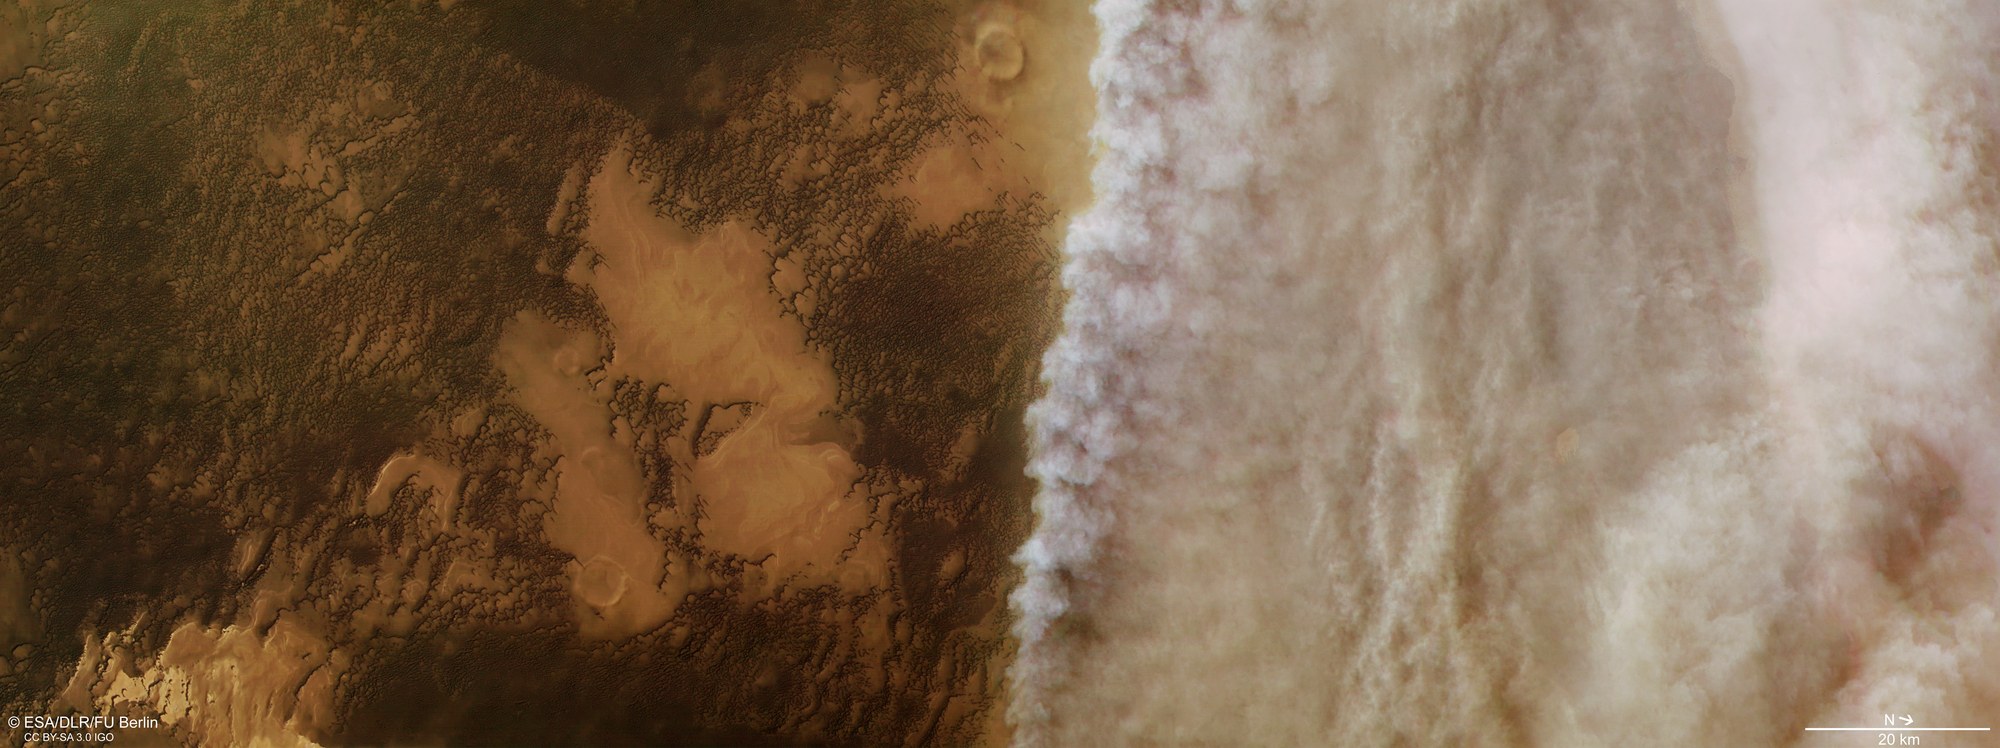 Harbinger of the dust storm season on Mars